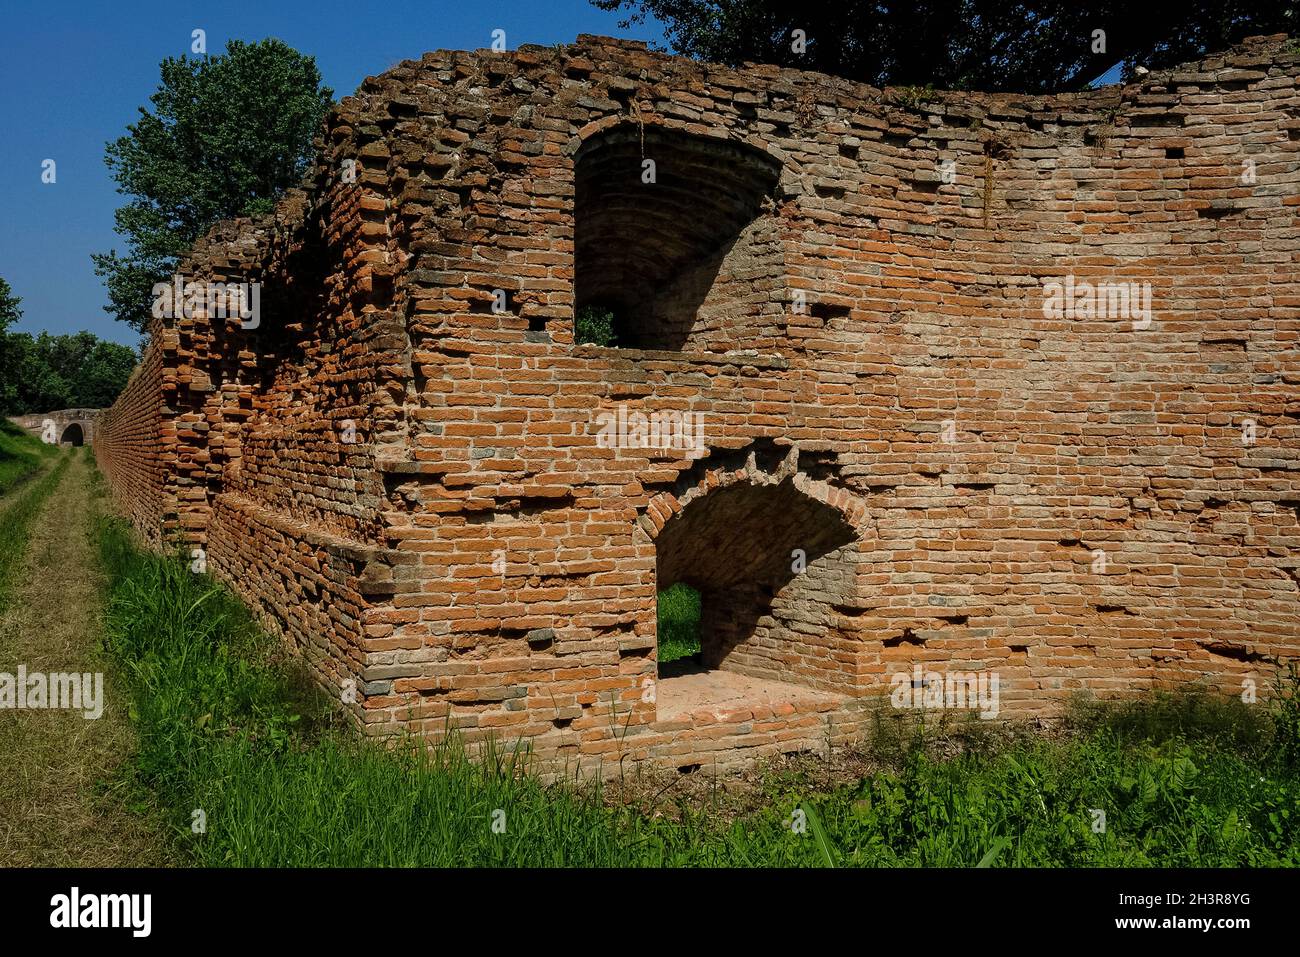 Military architecture in perspective - the historic city walls of Ferrara, Emilia-Romagna, Italy Stock Photo